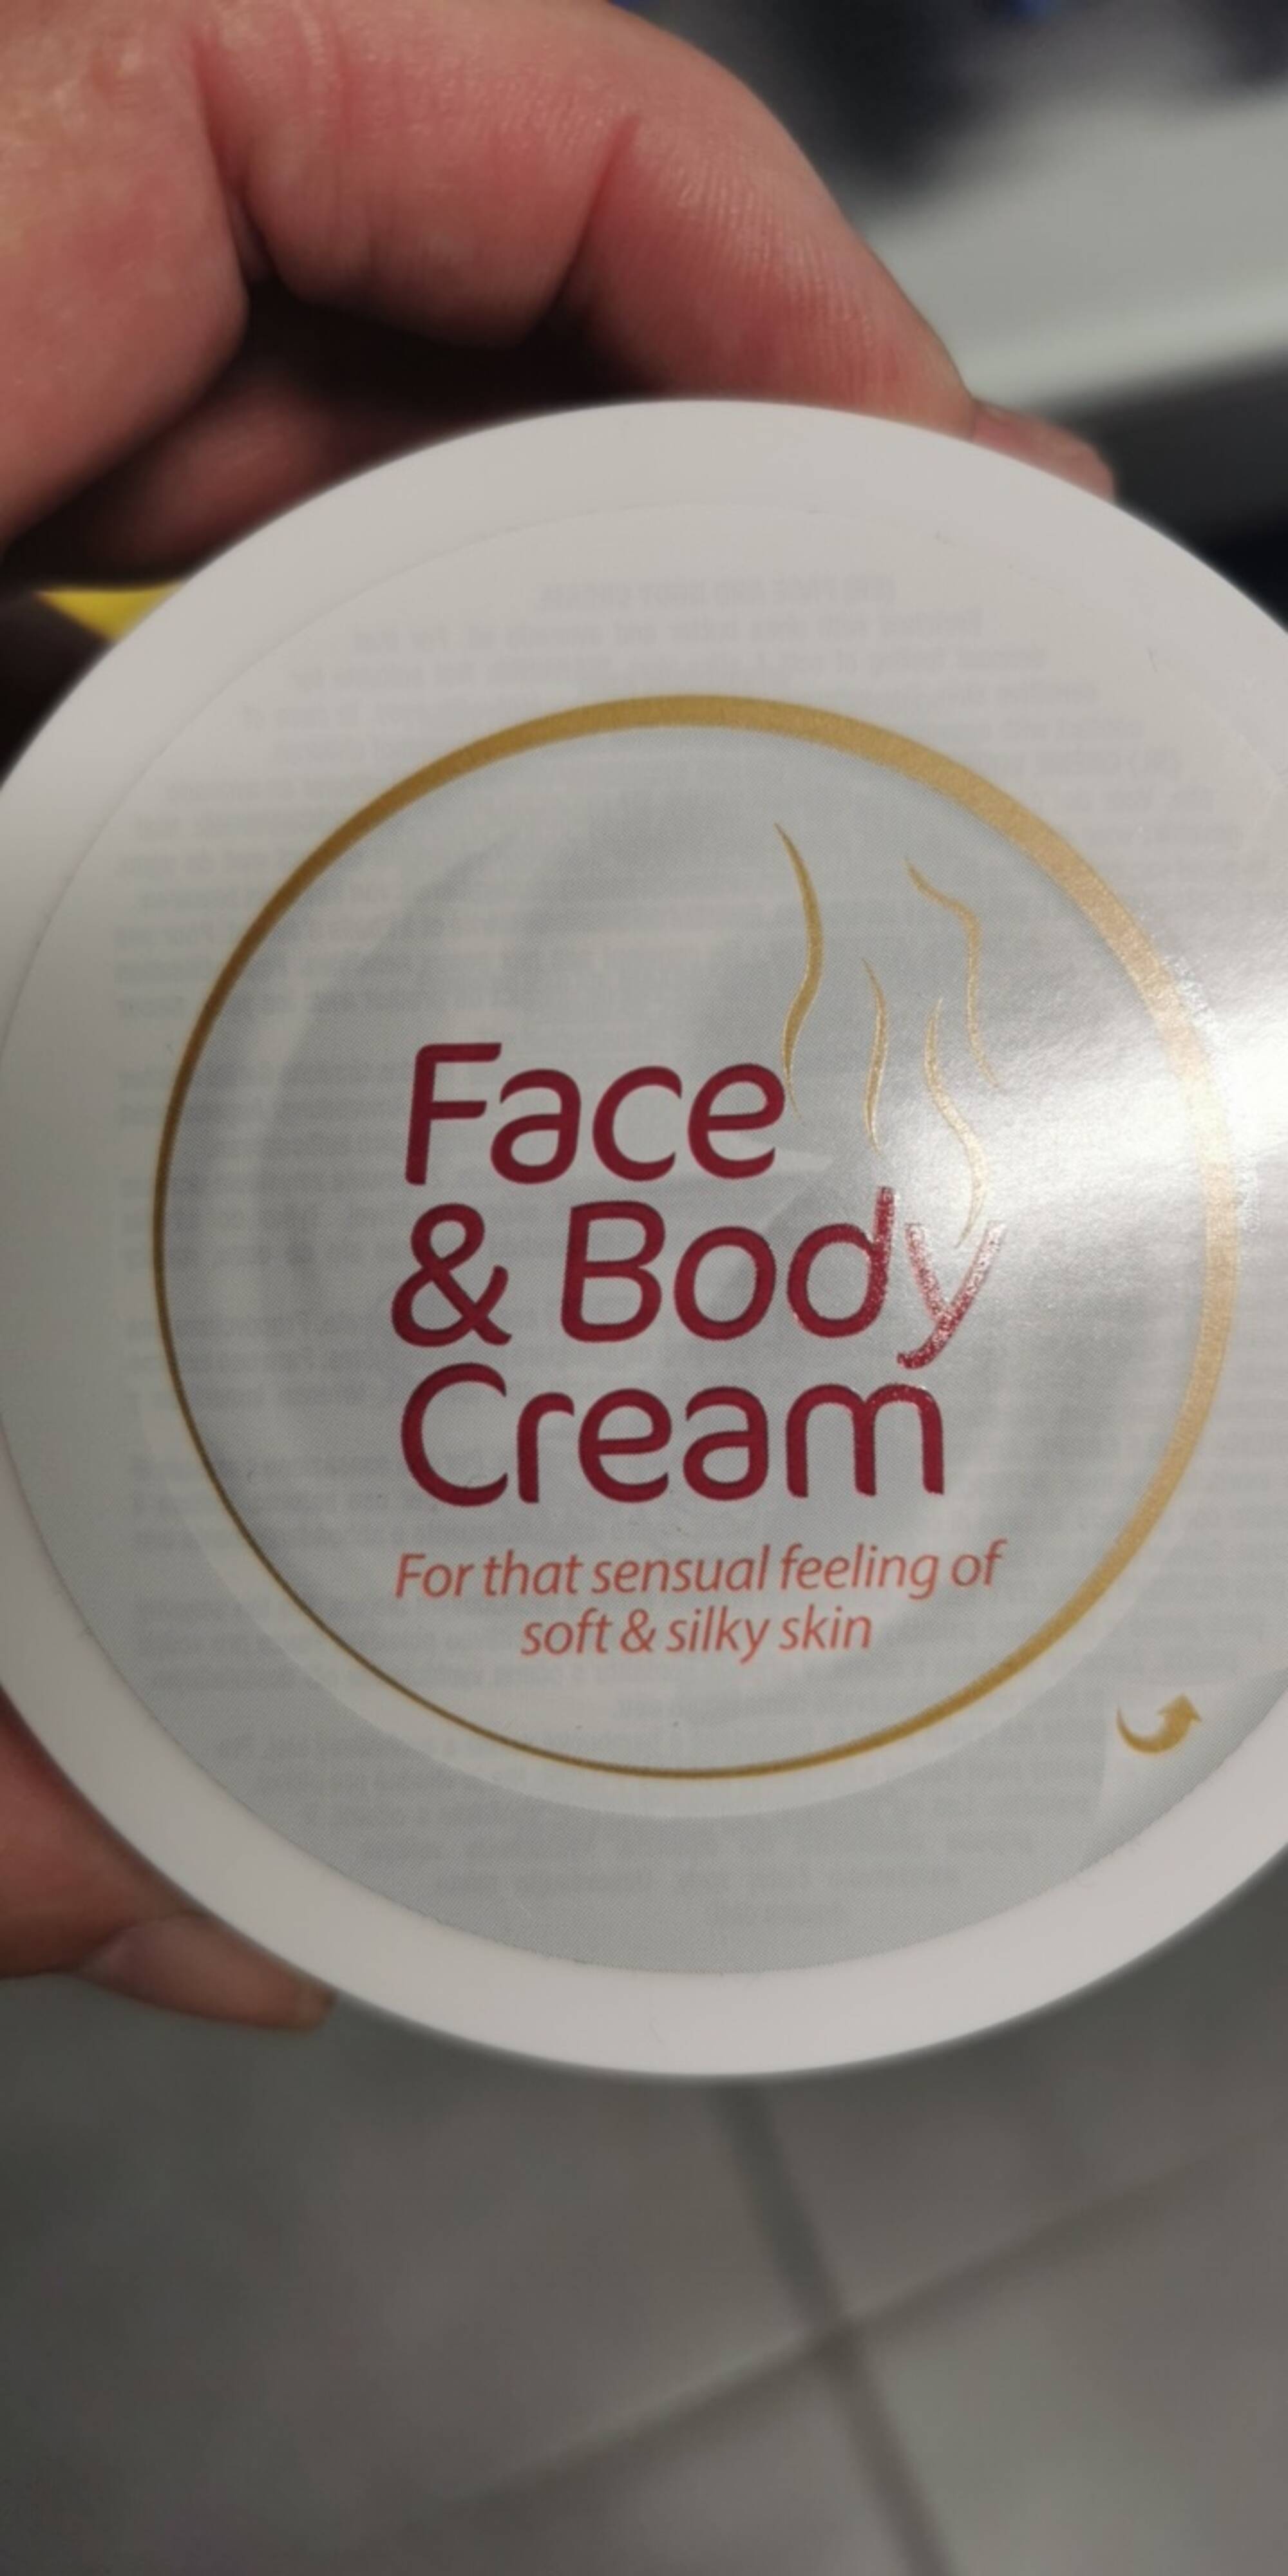 BAKINGSODA - Face & body cream